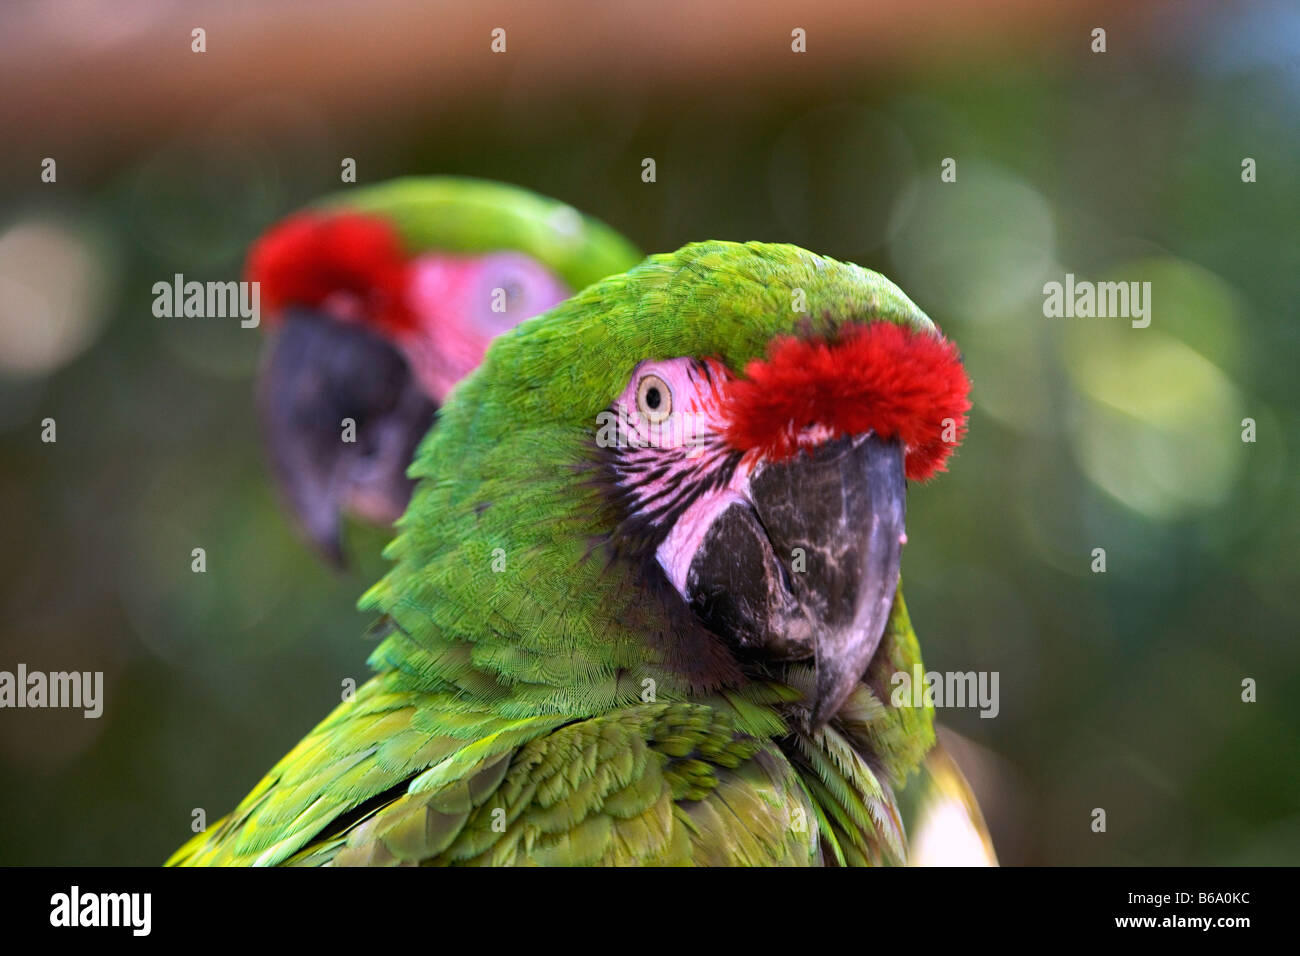 Loros xcaret fotografías e imágenes de alta resolución - Alamy